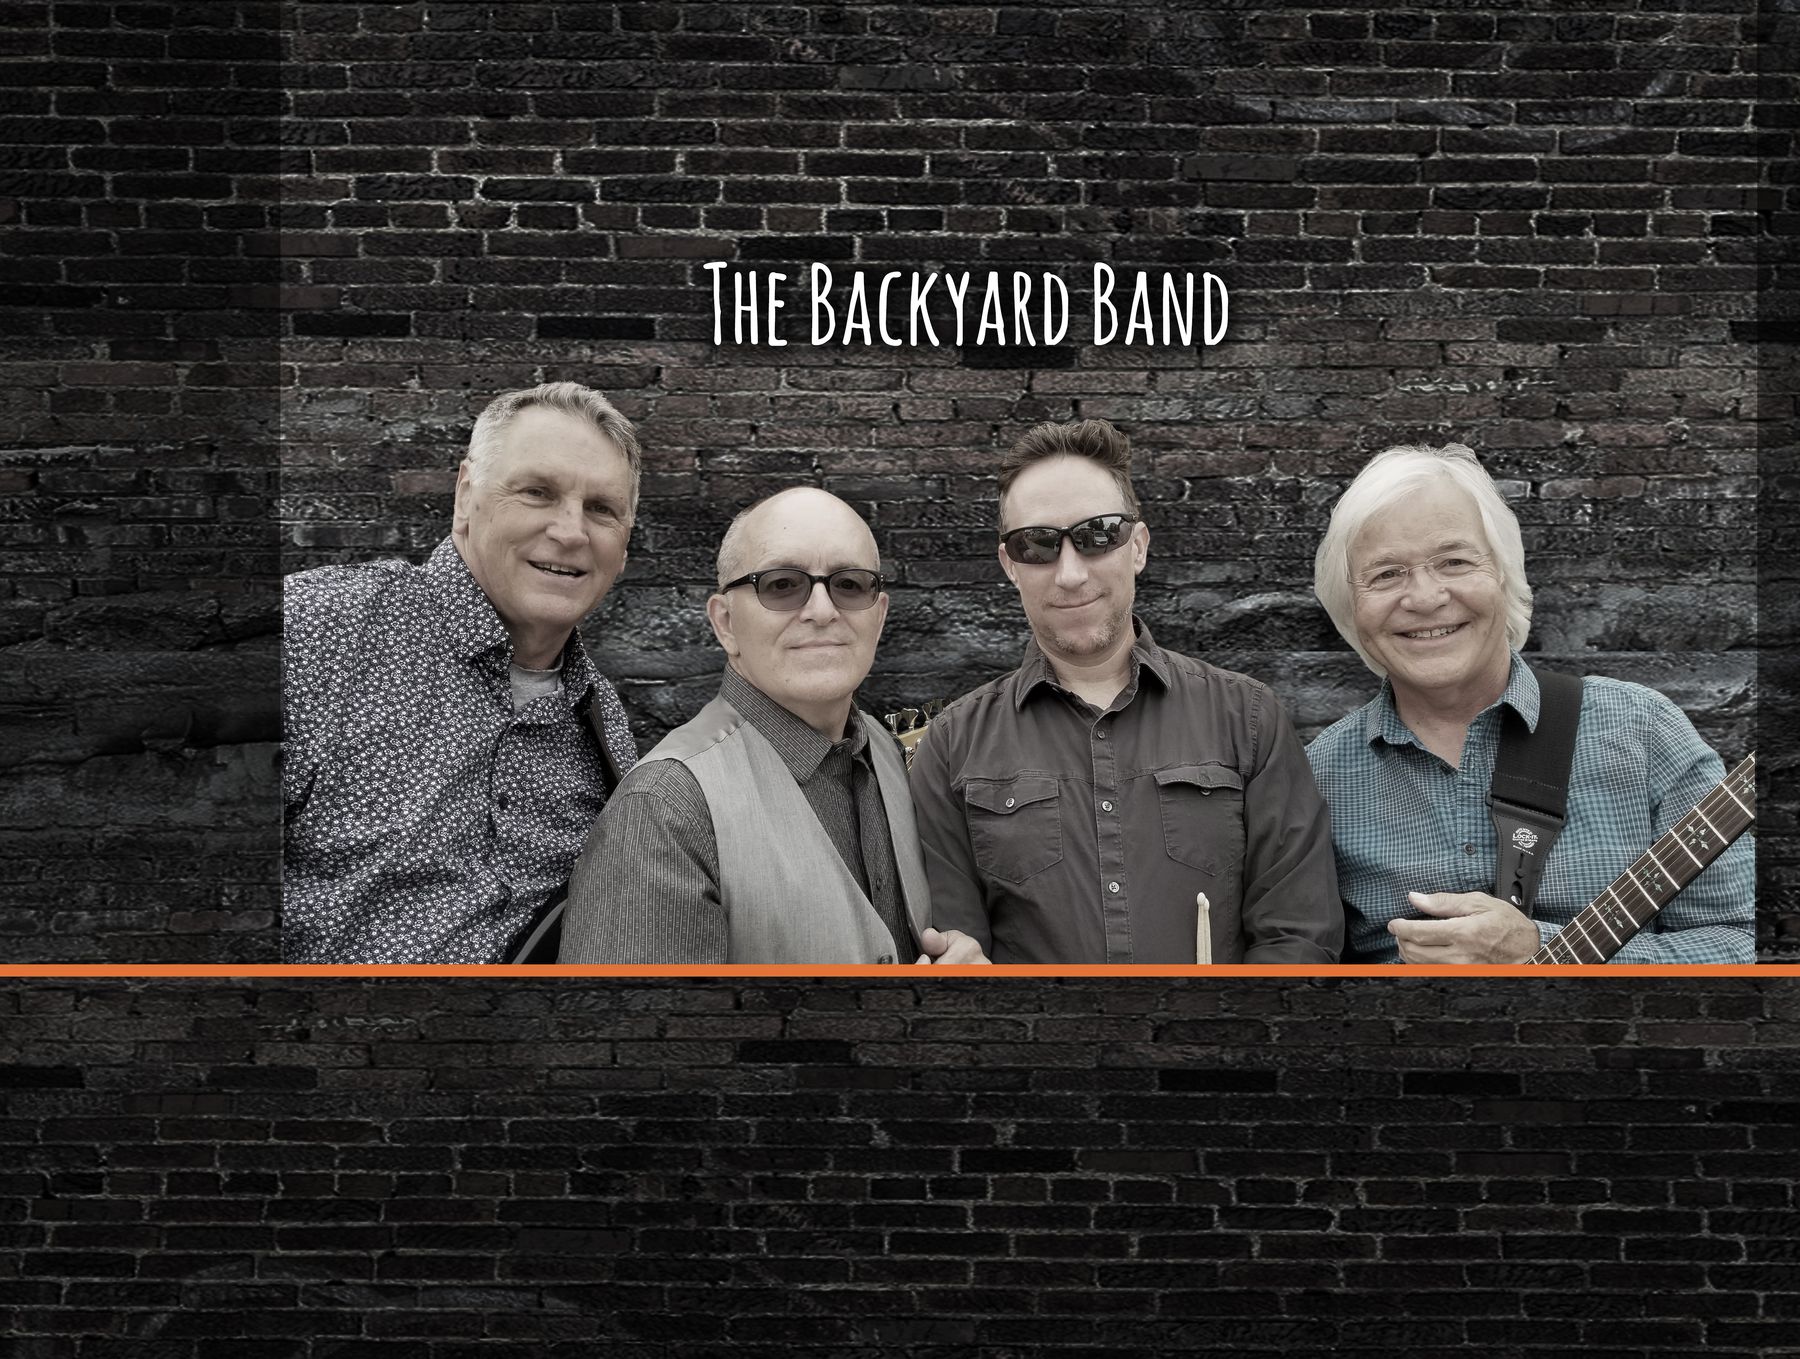 The Backyard Band